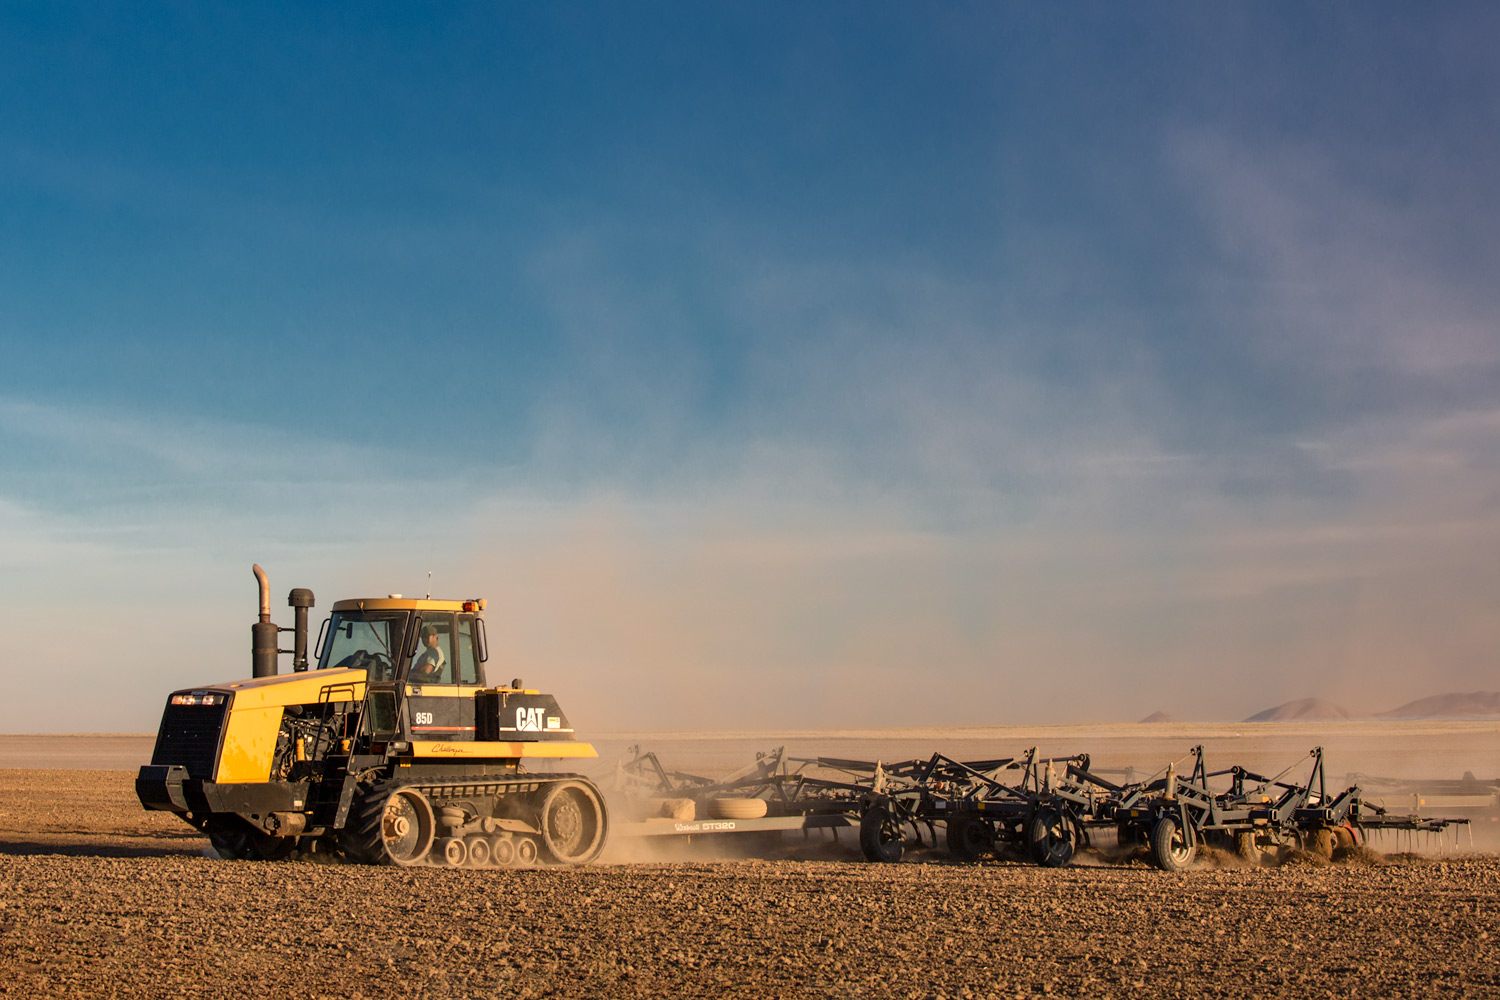 A Caterpillar tractor cultivating a field near Chinook, Montana.&nbsp;→ License Photo